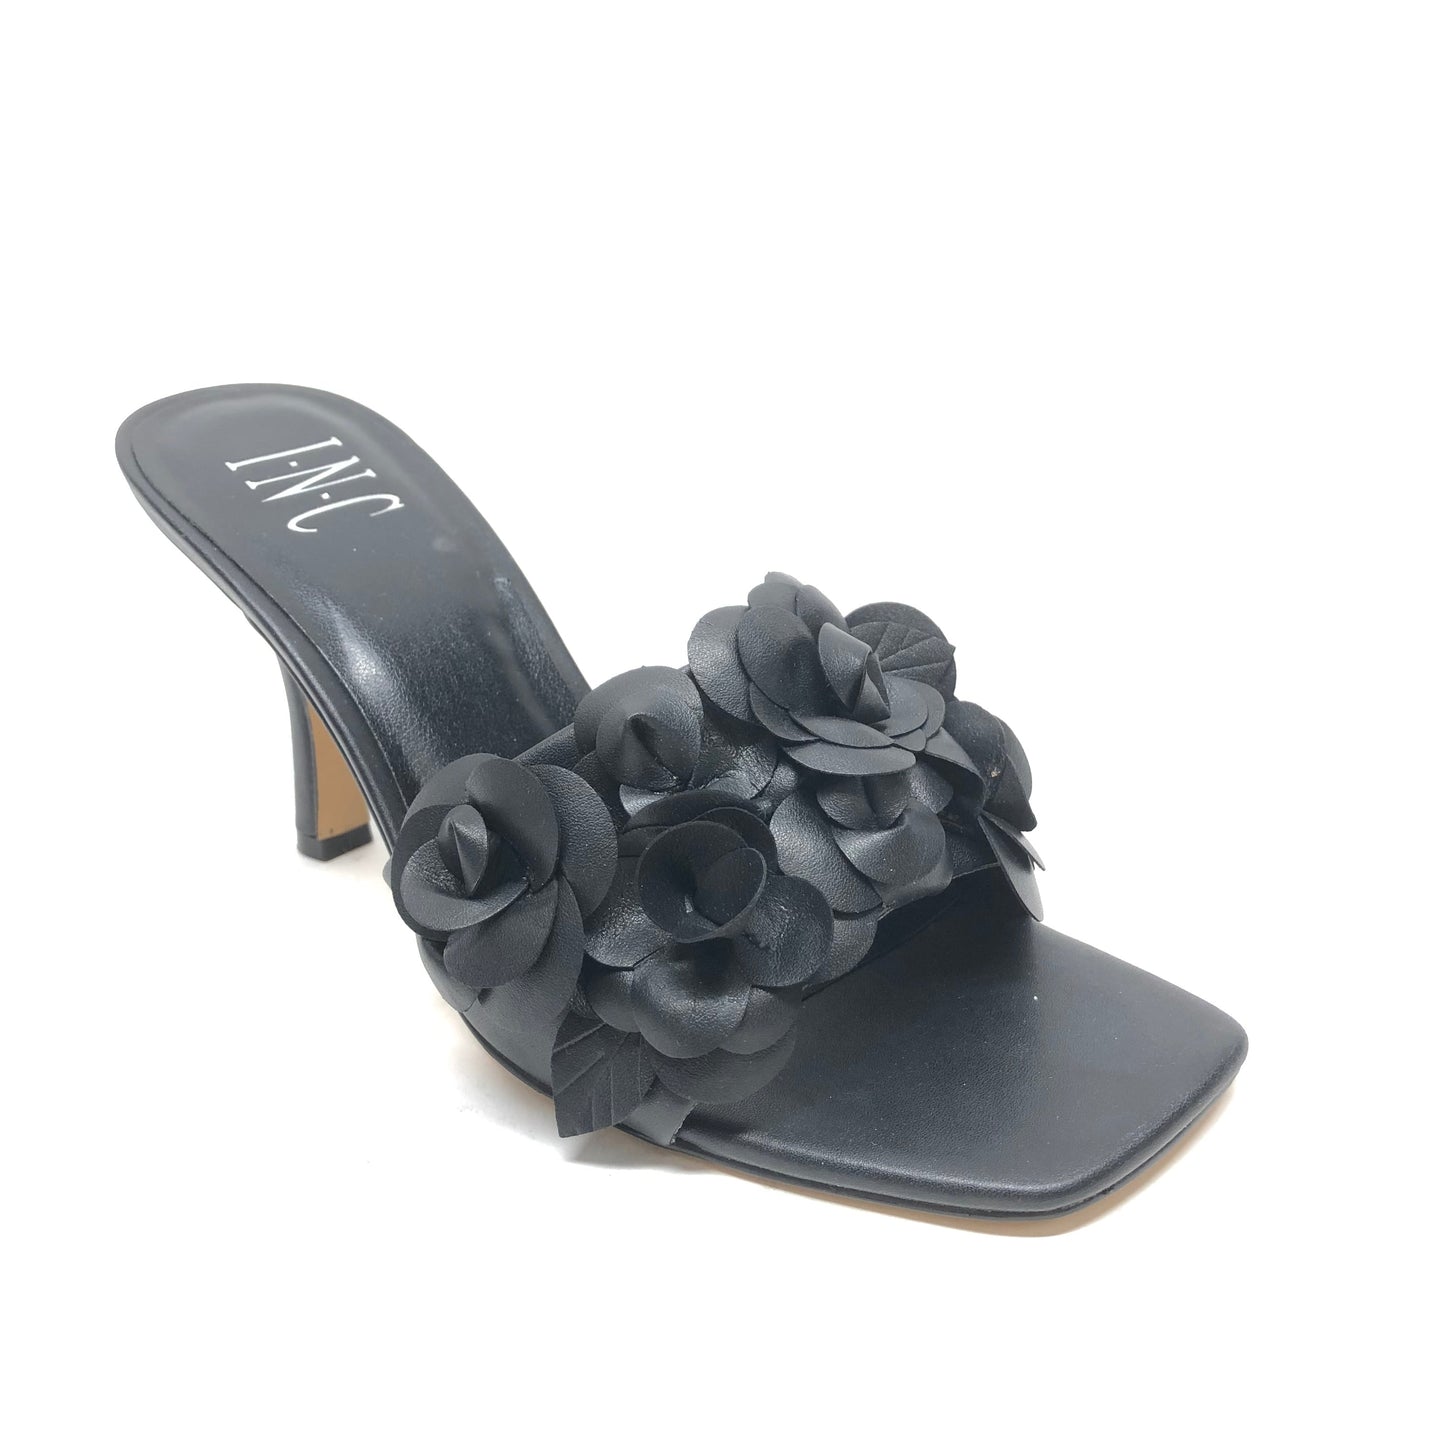 Sandals Heels Stiletto By Inc  Size: 7.5